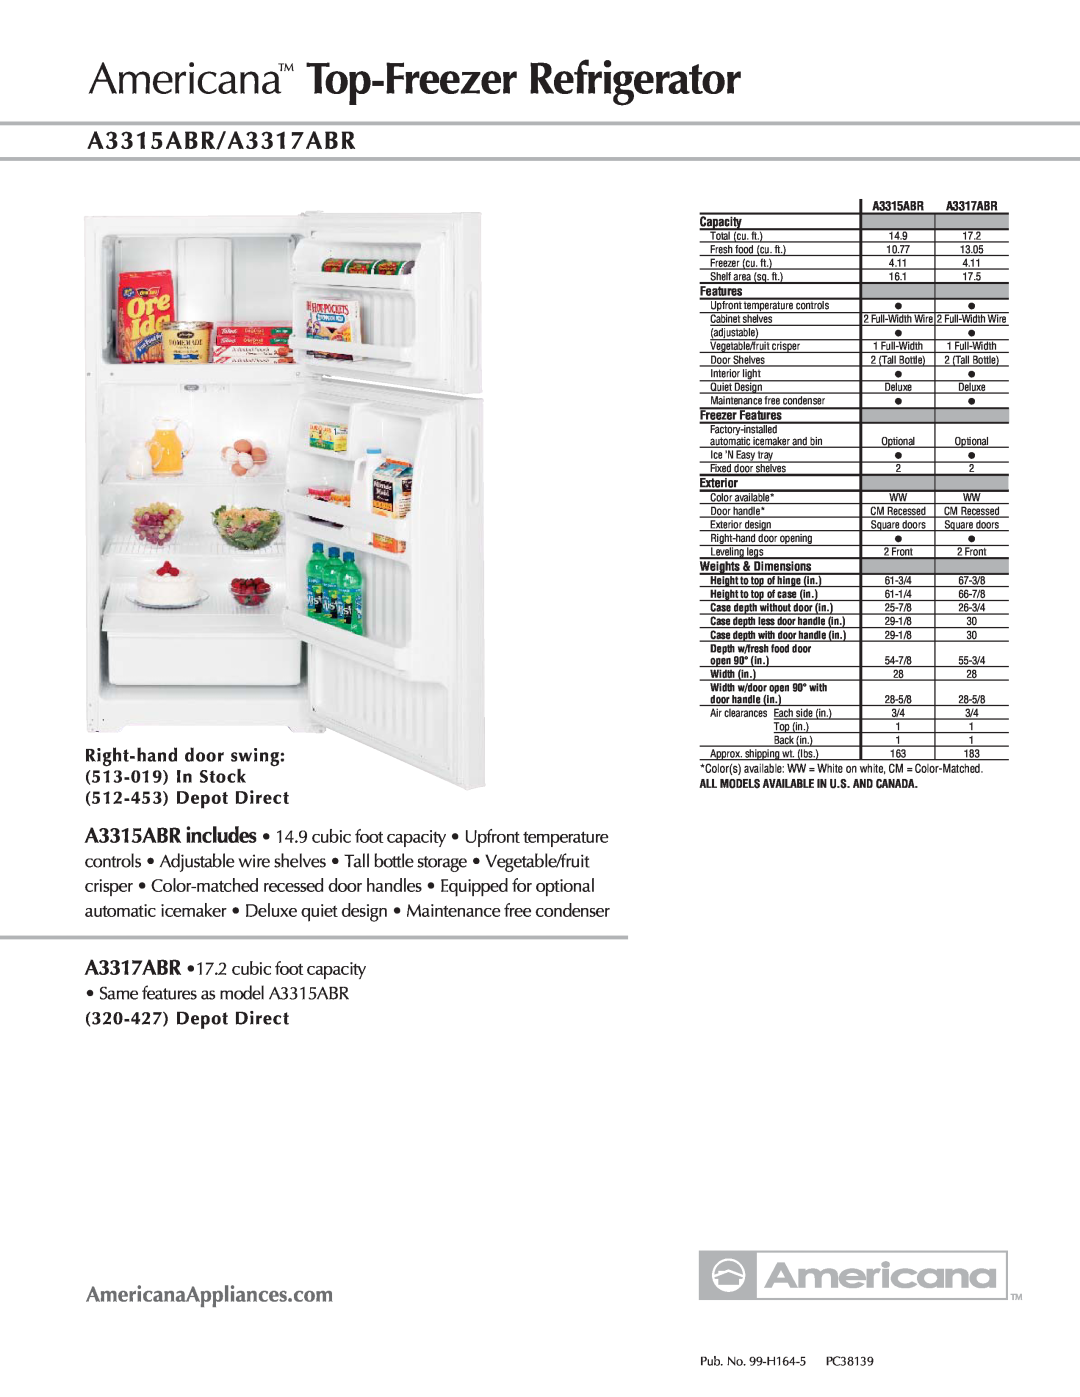 Americana Appliances dimensions Americana Top-FreezerRefrigerator, A3315ABR/A3317ABR, 512-453Depot Direct, Capacity 